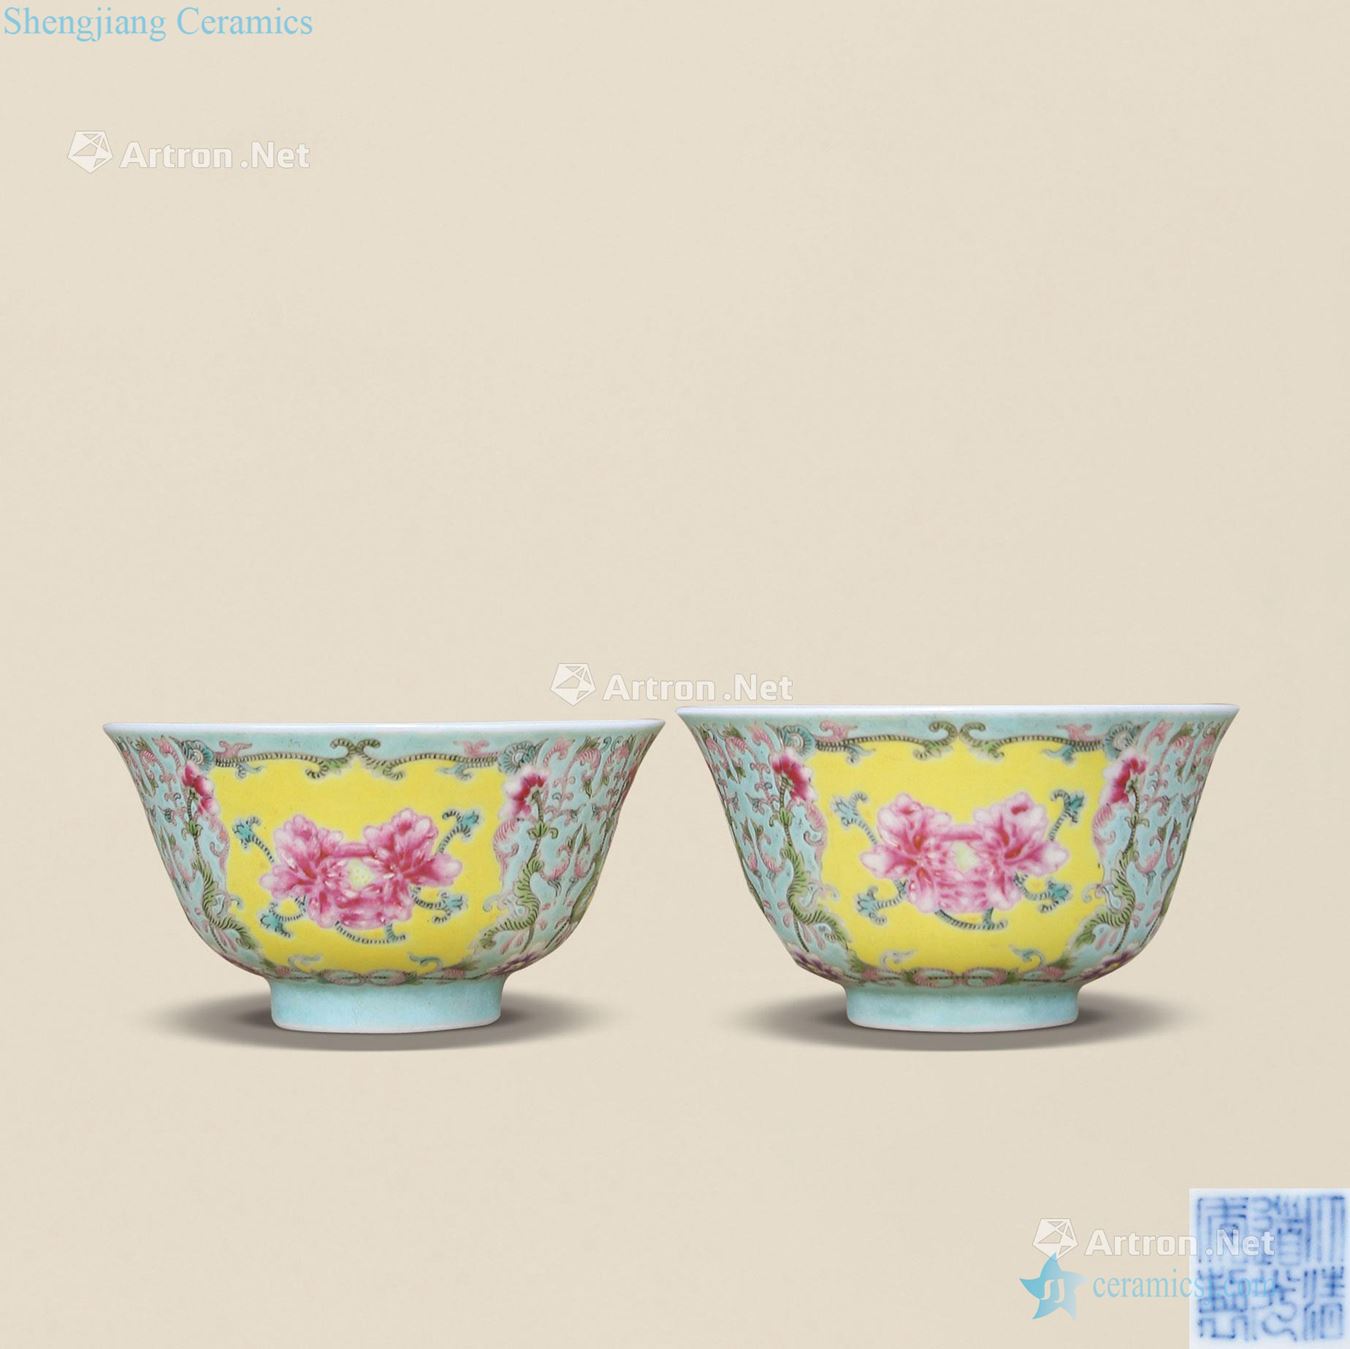 Qing daoguang Turquoise enamel medallion flowers green-splashed bowls (a)